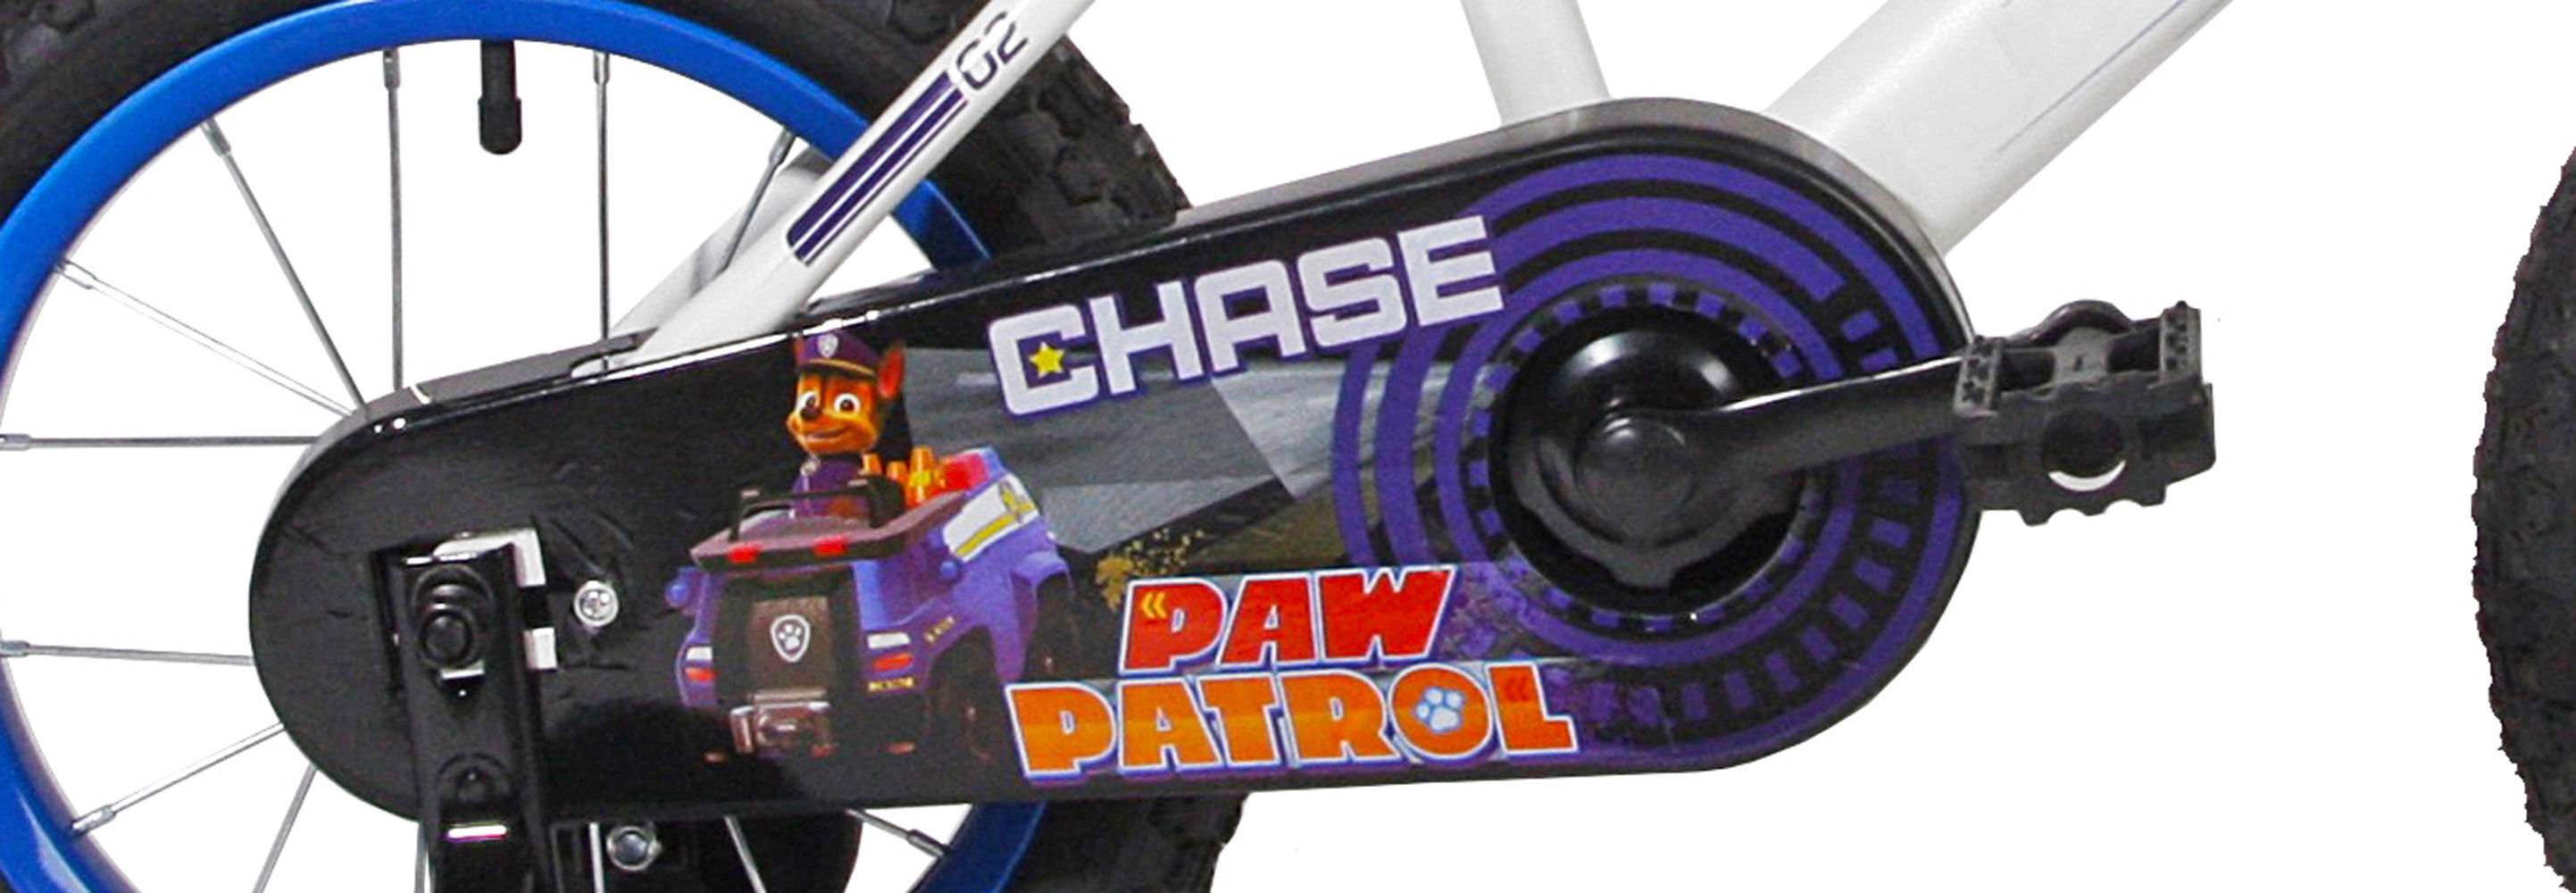 paw patrol chase bike